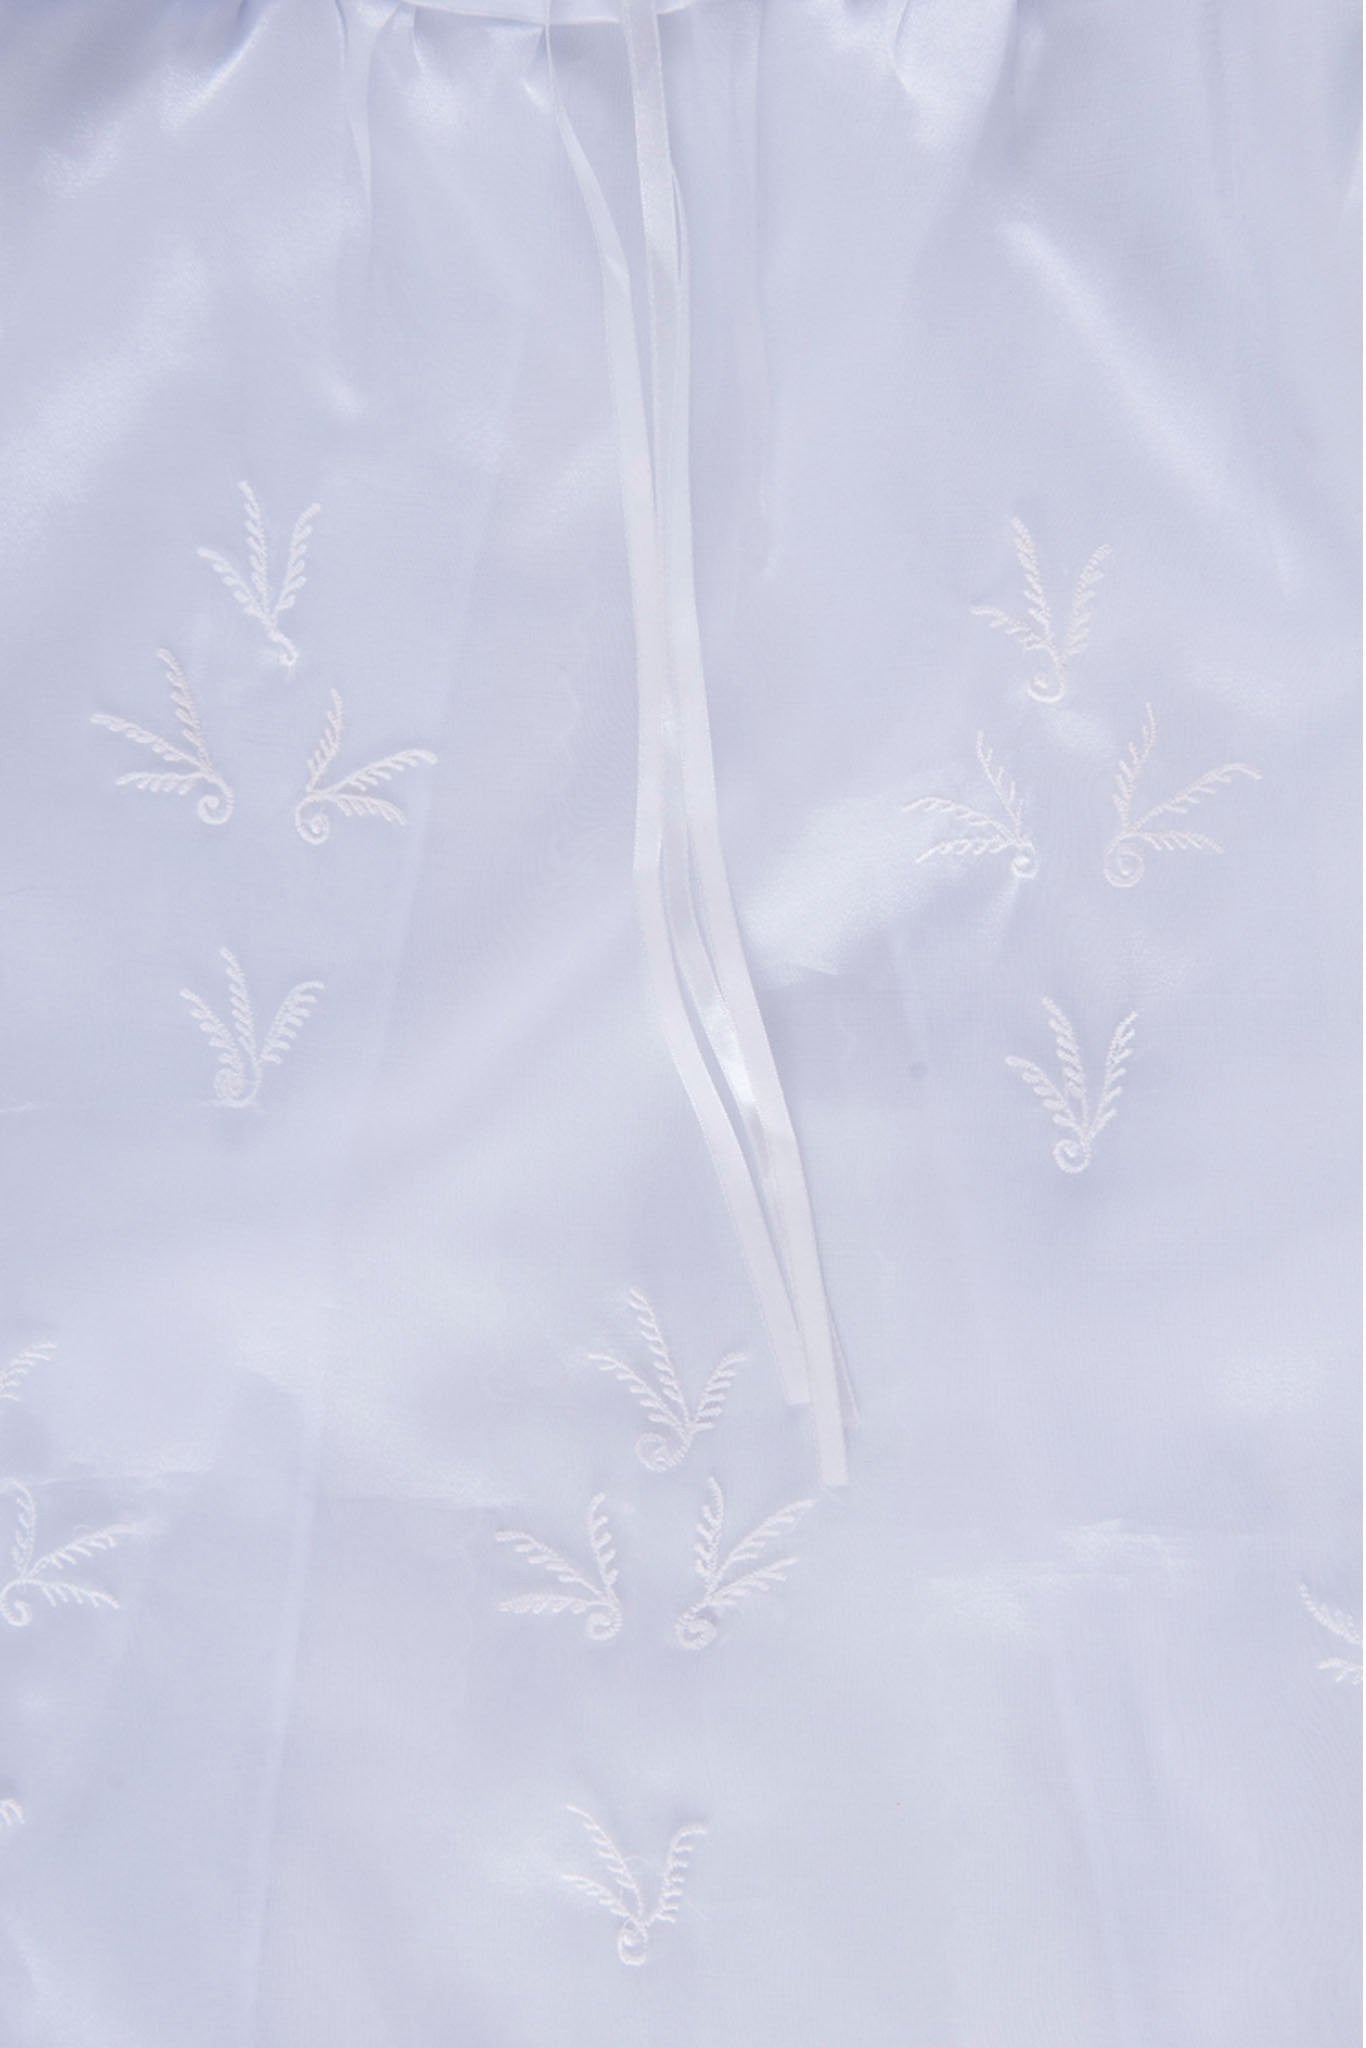 BARONG WAREHOUSE - GS01 - Girls' Baptism Dress White